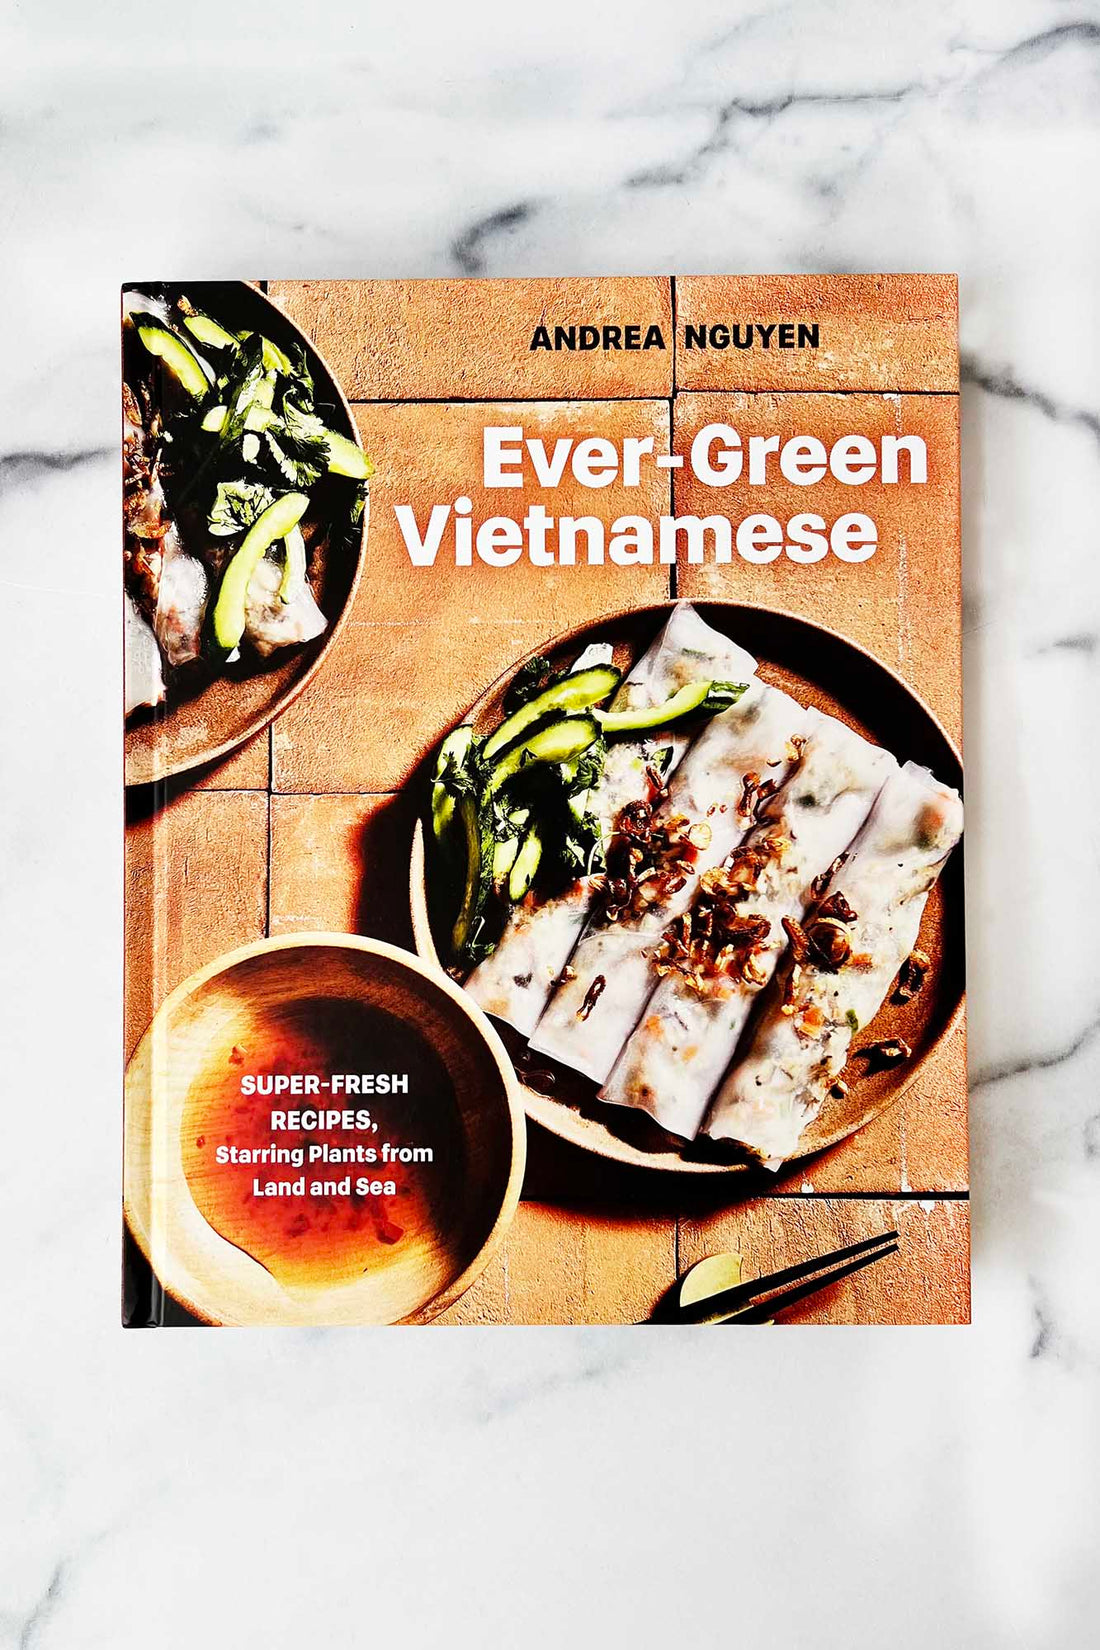 Ever-Green Vietnamese